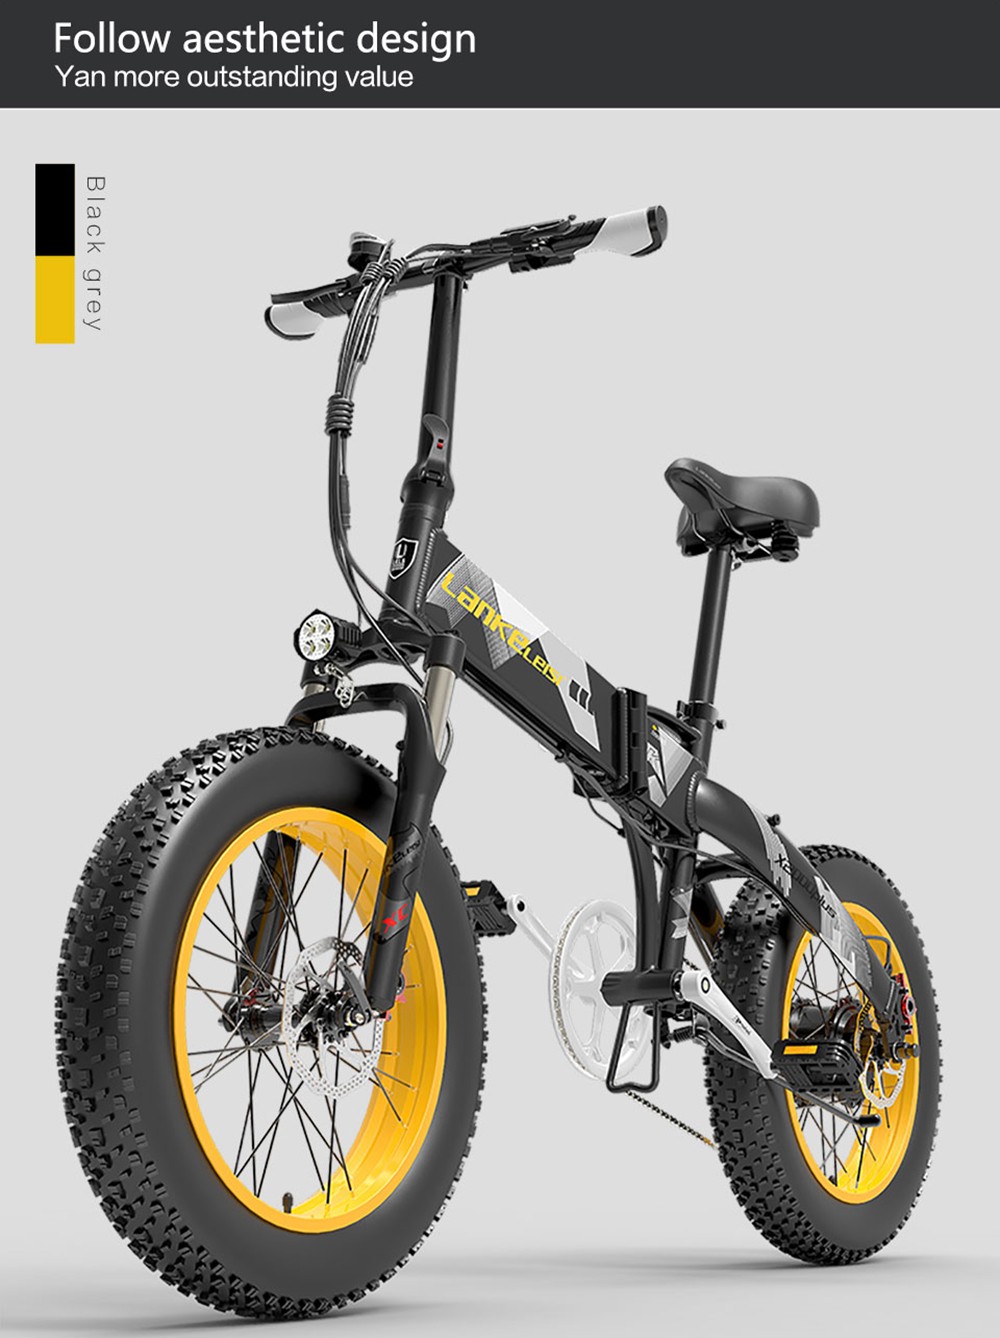 LANKELEISI X2000 PLUS 10.4Ah 48V 500W Moped Electric Bike Folding Bike 35km/h Max Speed Max Load 150kg - Red